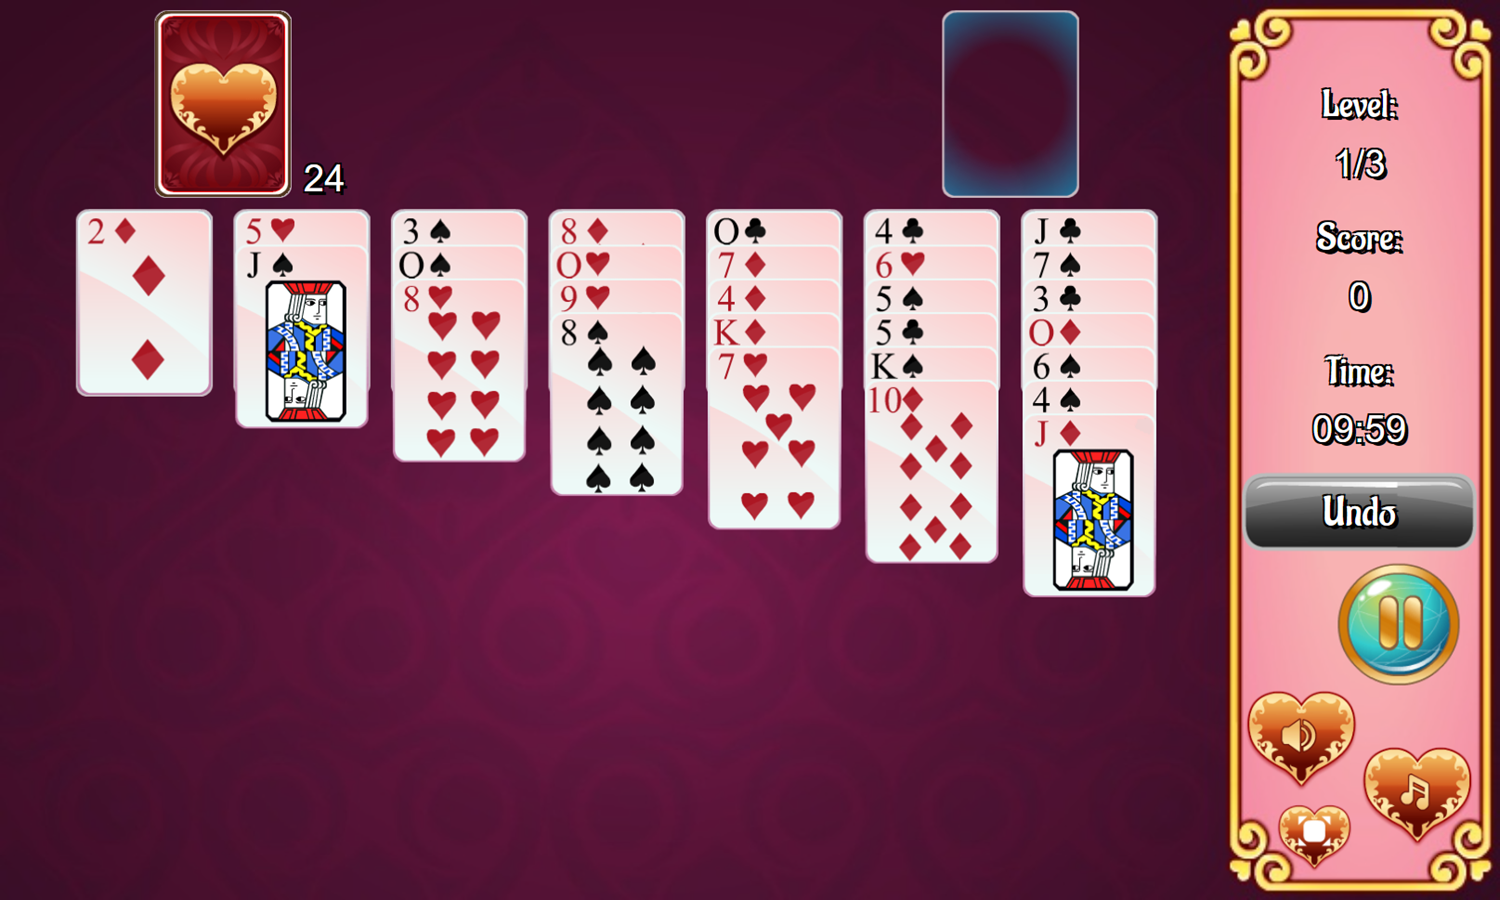 Ace of Hearts Game Start Screenshot.